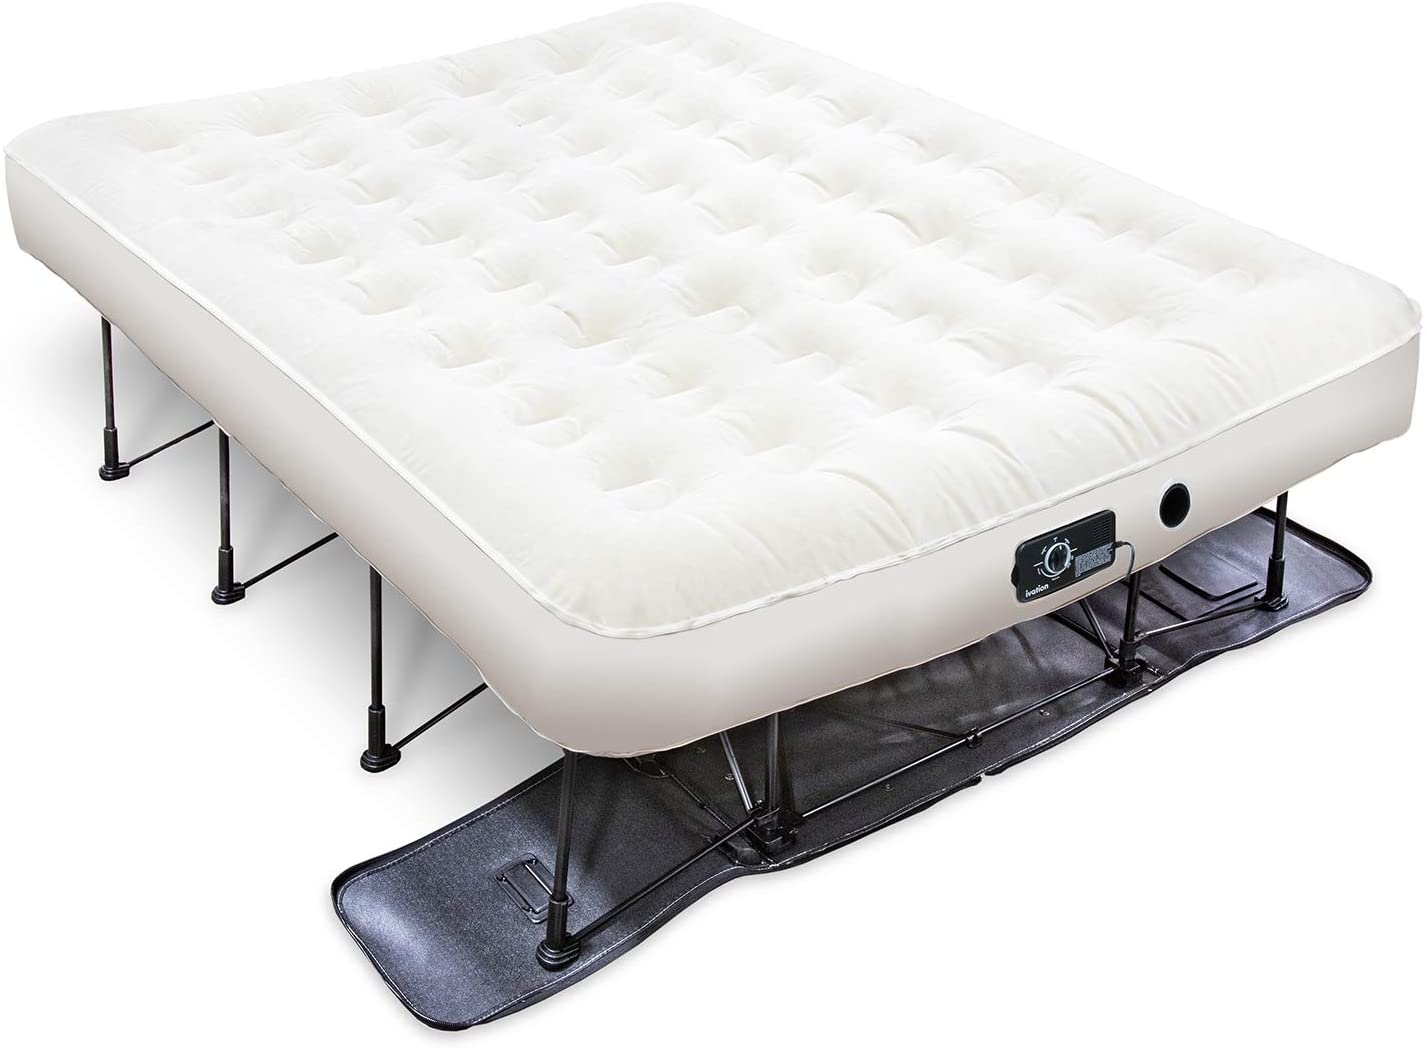 air mattresses at lowes